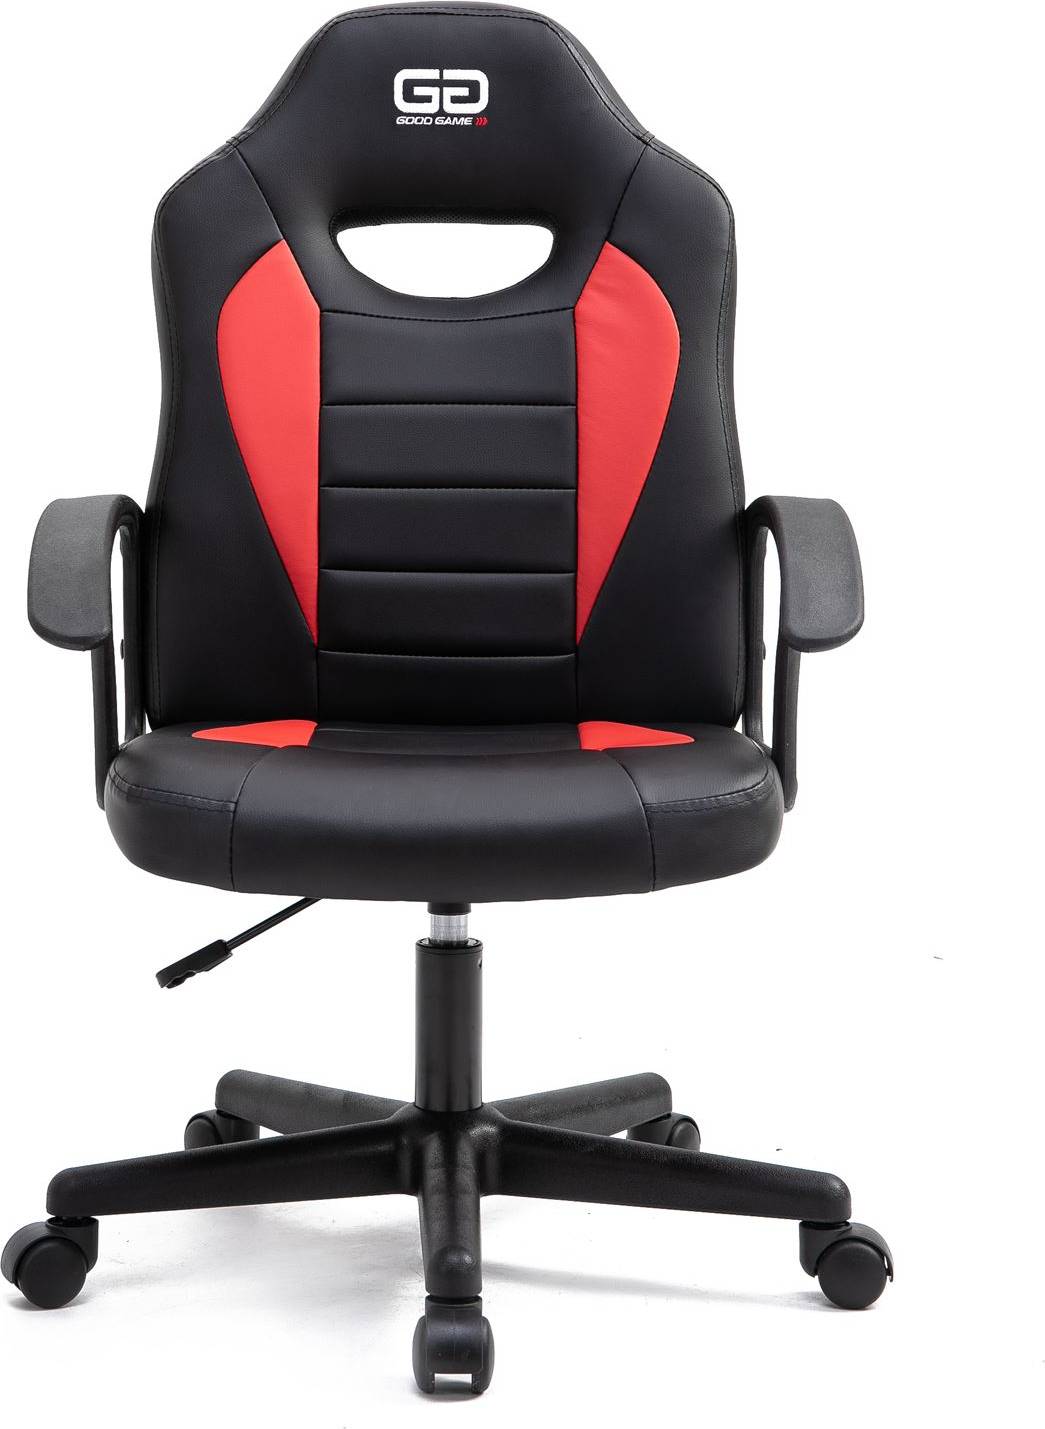  Bild på Good Game Junior Gaming Chair - Black/Red gamingstol